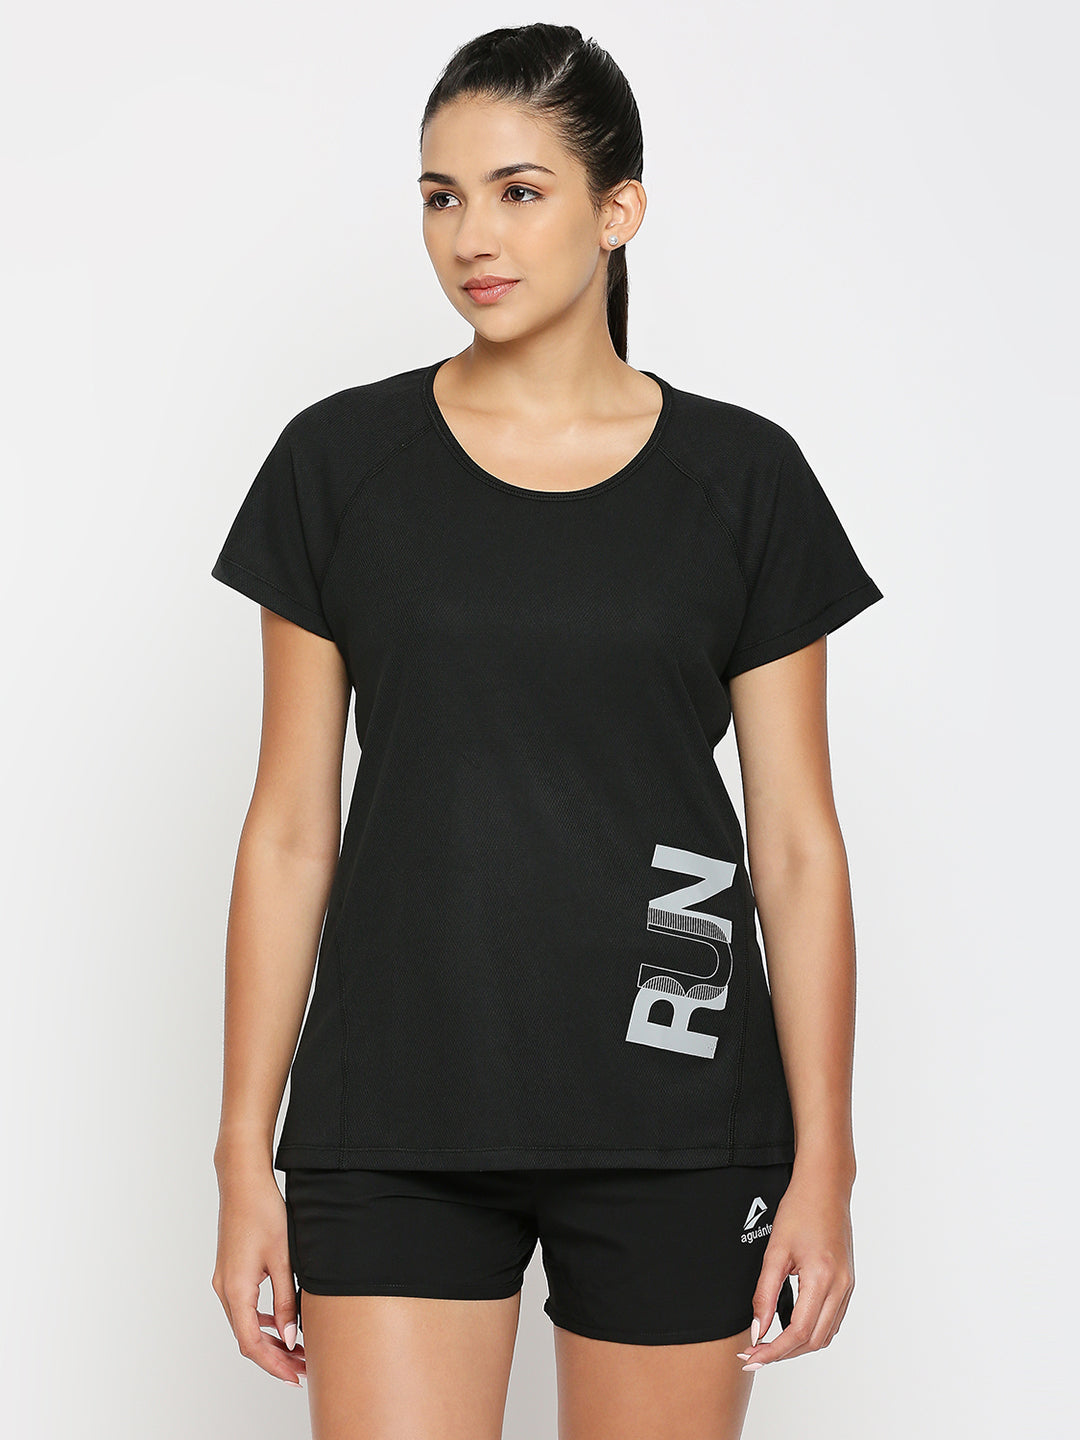 Cadence Workout T-shirt (Printed)